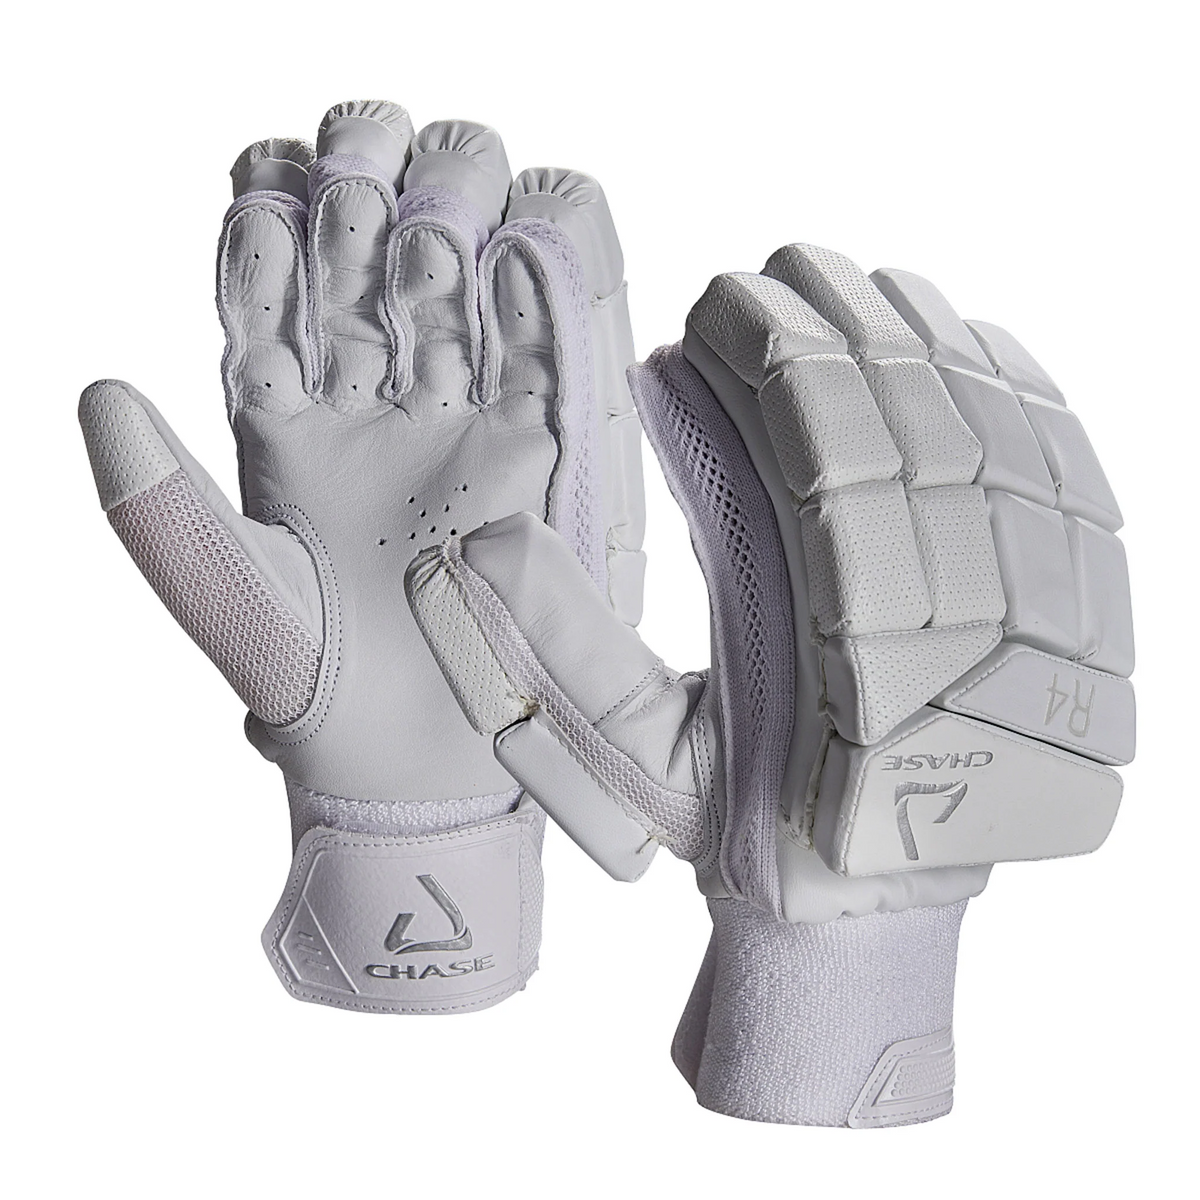 Chase R4 Cricket Batting Gloves